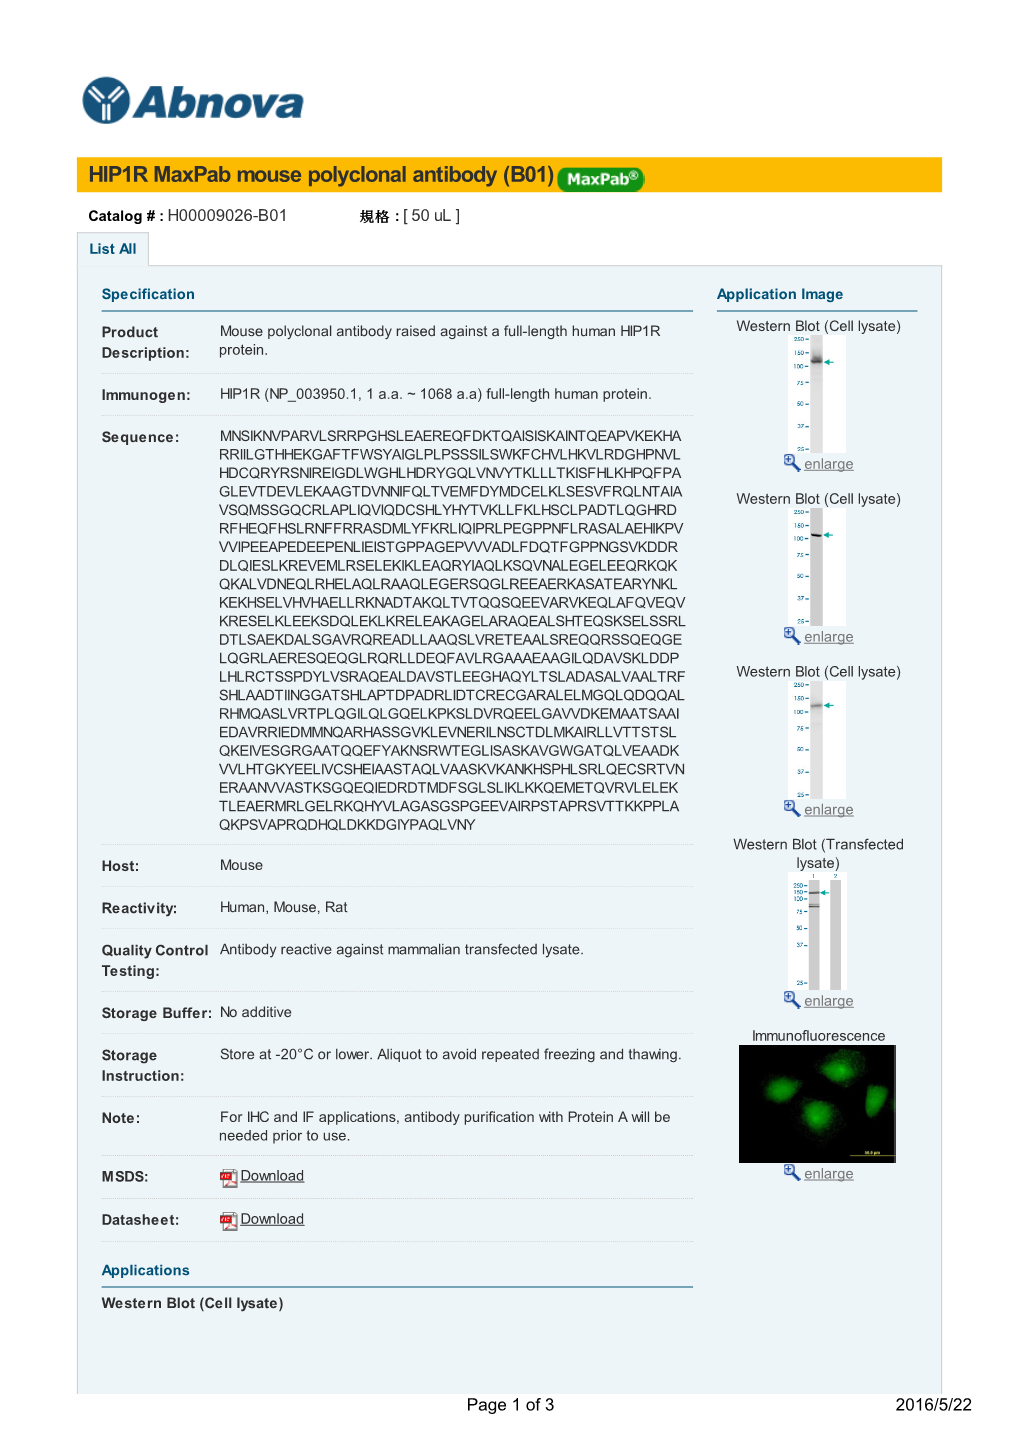 HIP1R Maxpab Mouse Polyclonal Antibody (B01)